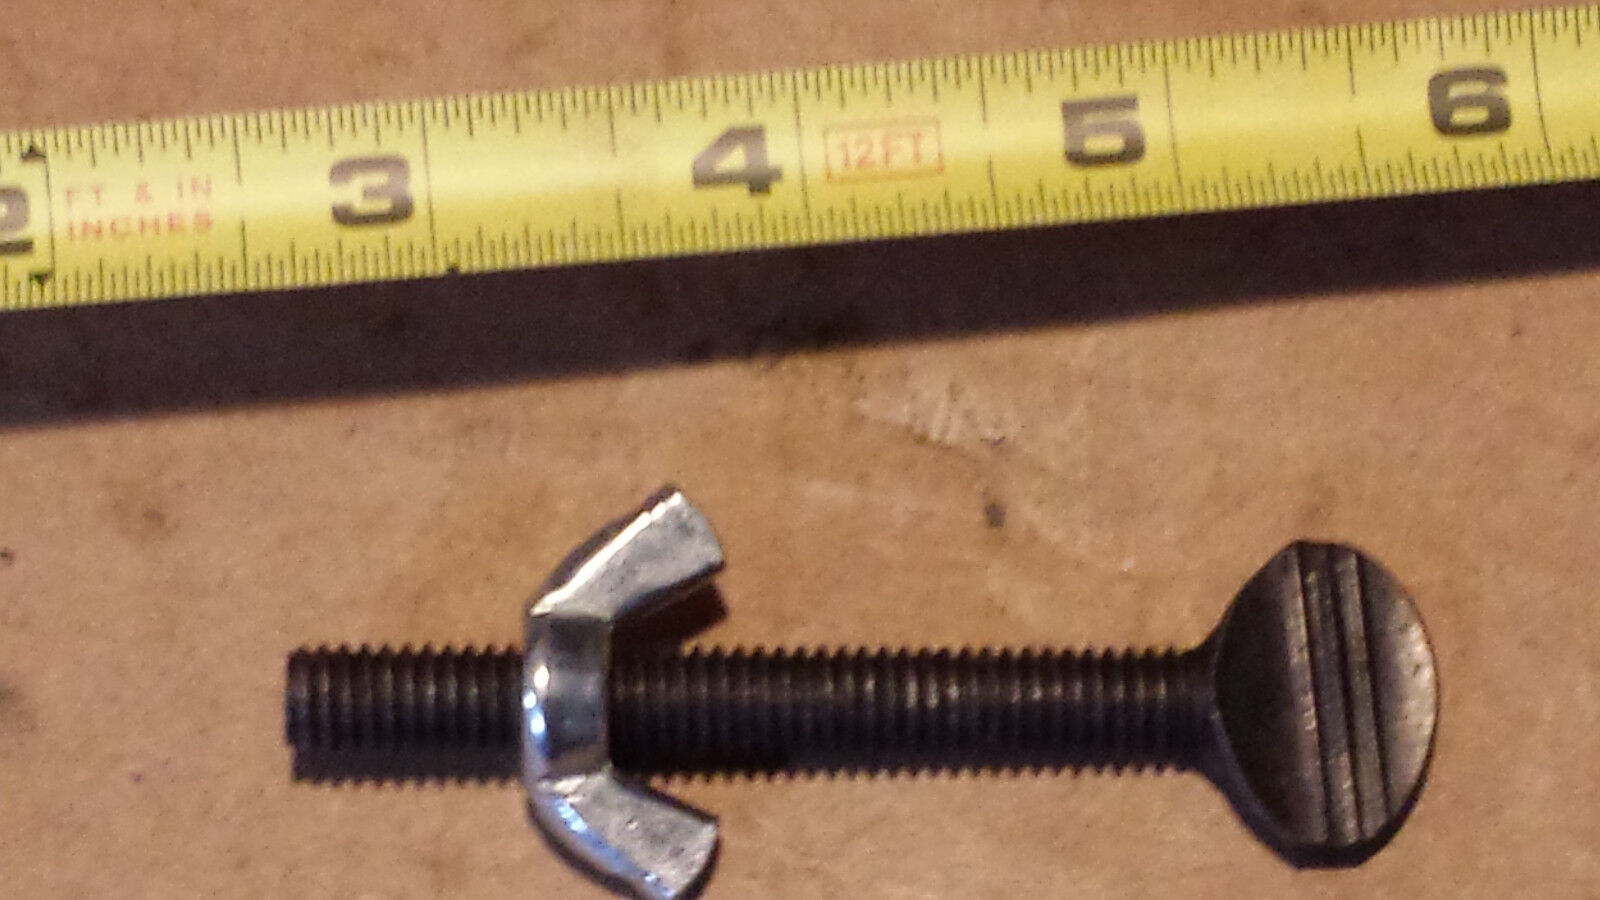  Bandsaw Slide tracking adjustment screw & locknut replaces Delta part LBS-106